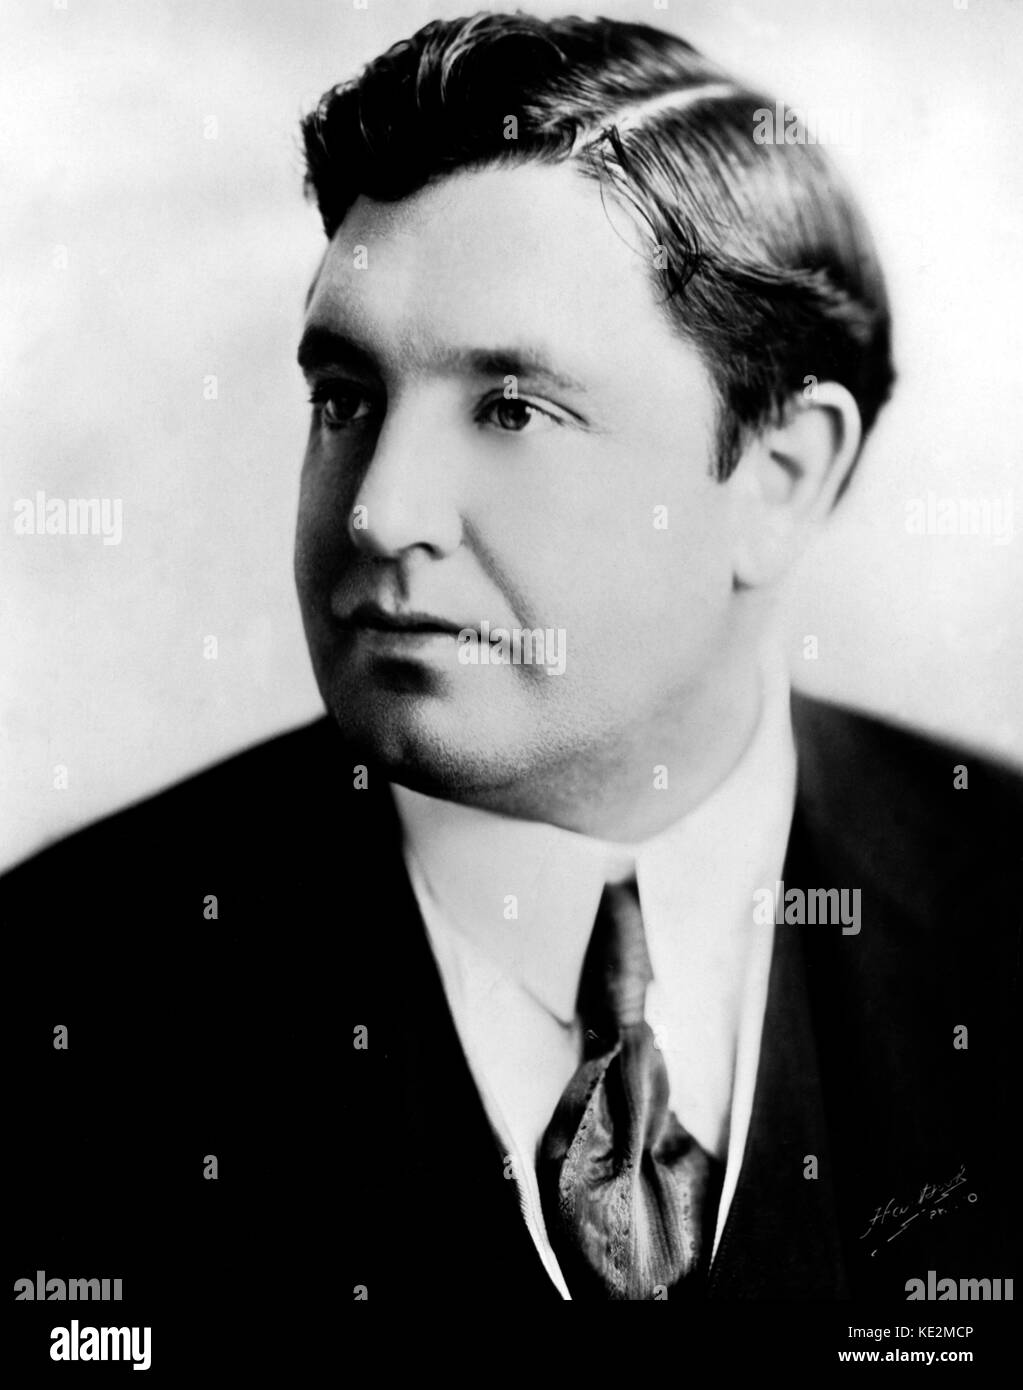 John McCormack - portrait of the Irish tenor. 14 June 1884-16 September 1945. Stock Photo